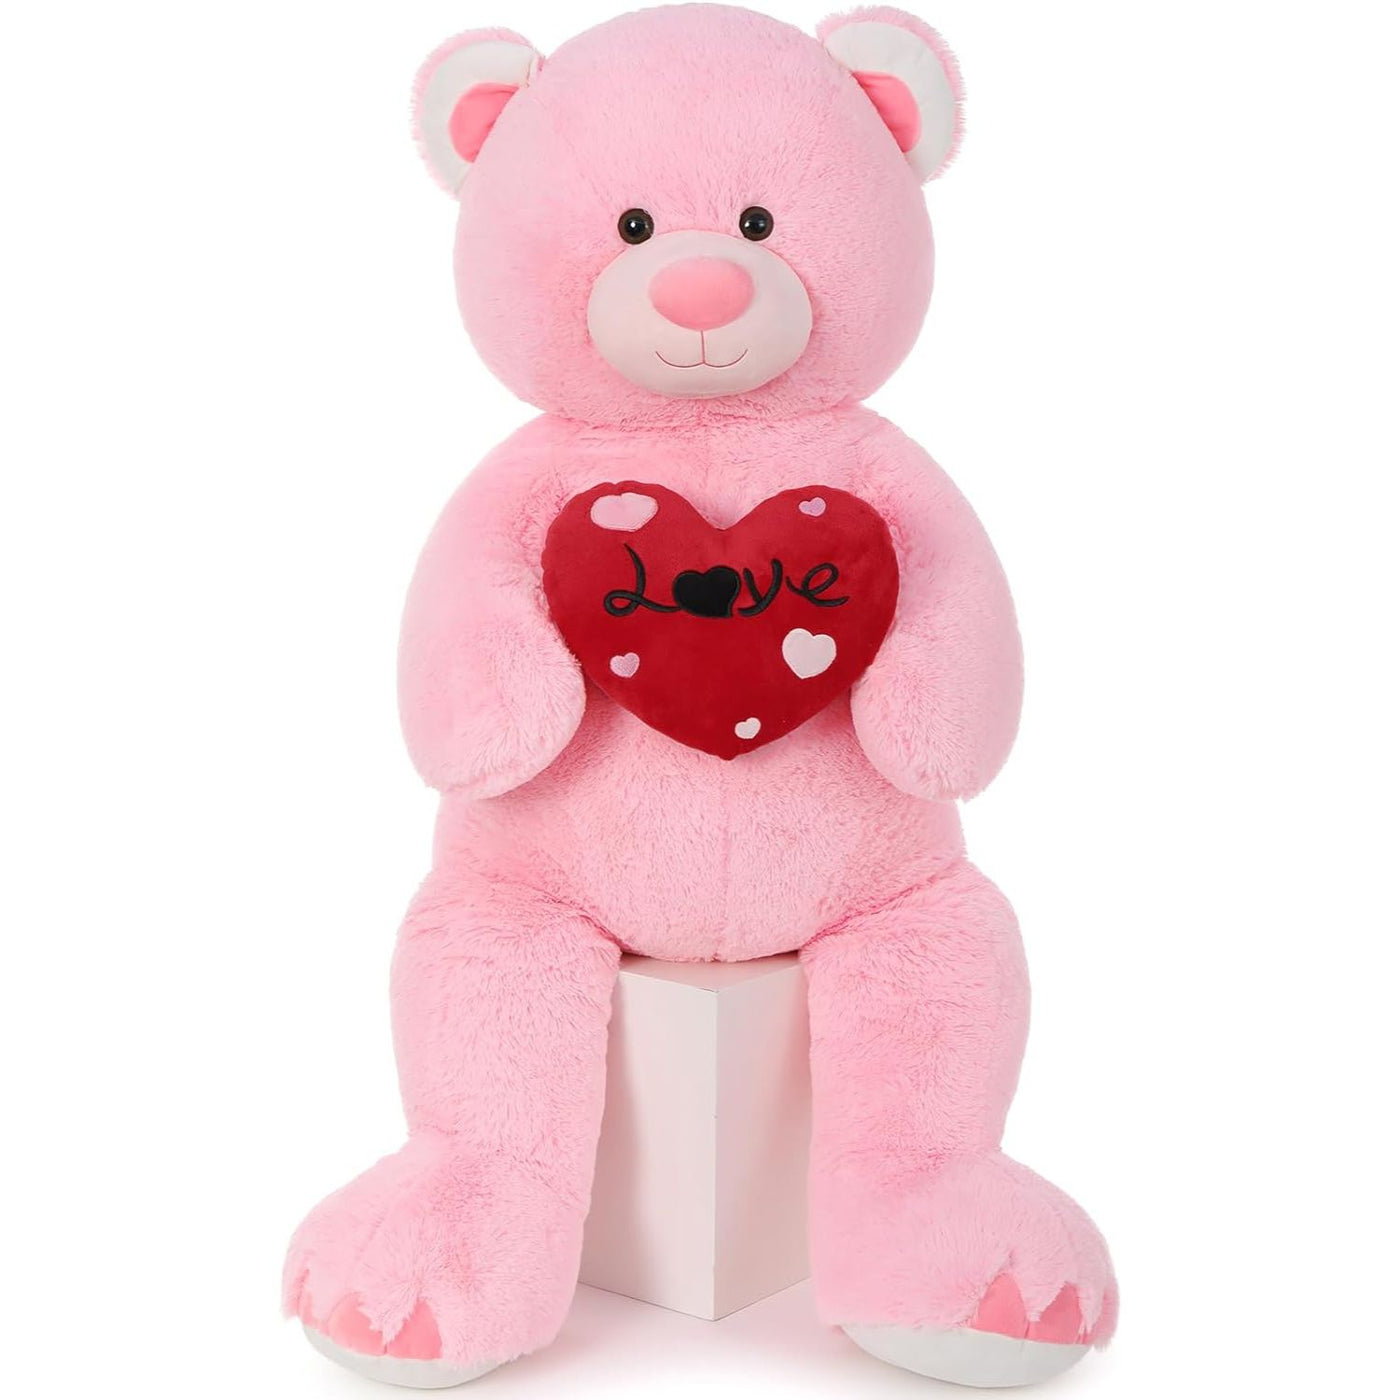 Valentine's Teddy Bear Plush Toy, Pink, 51 Inches - MorisMos Stuffed Toys